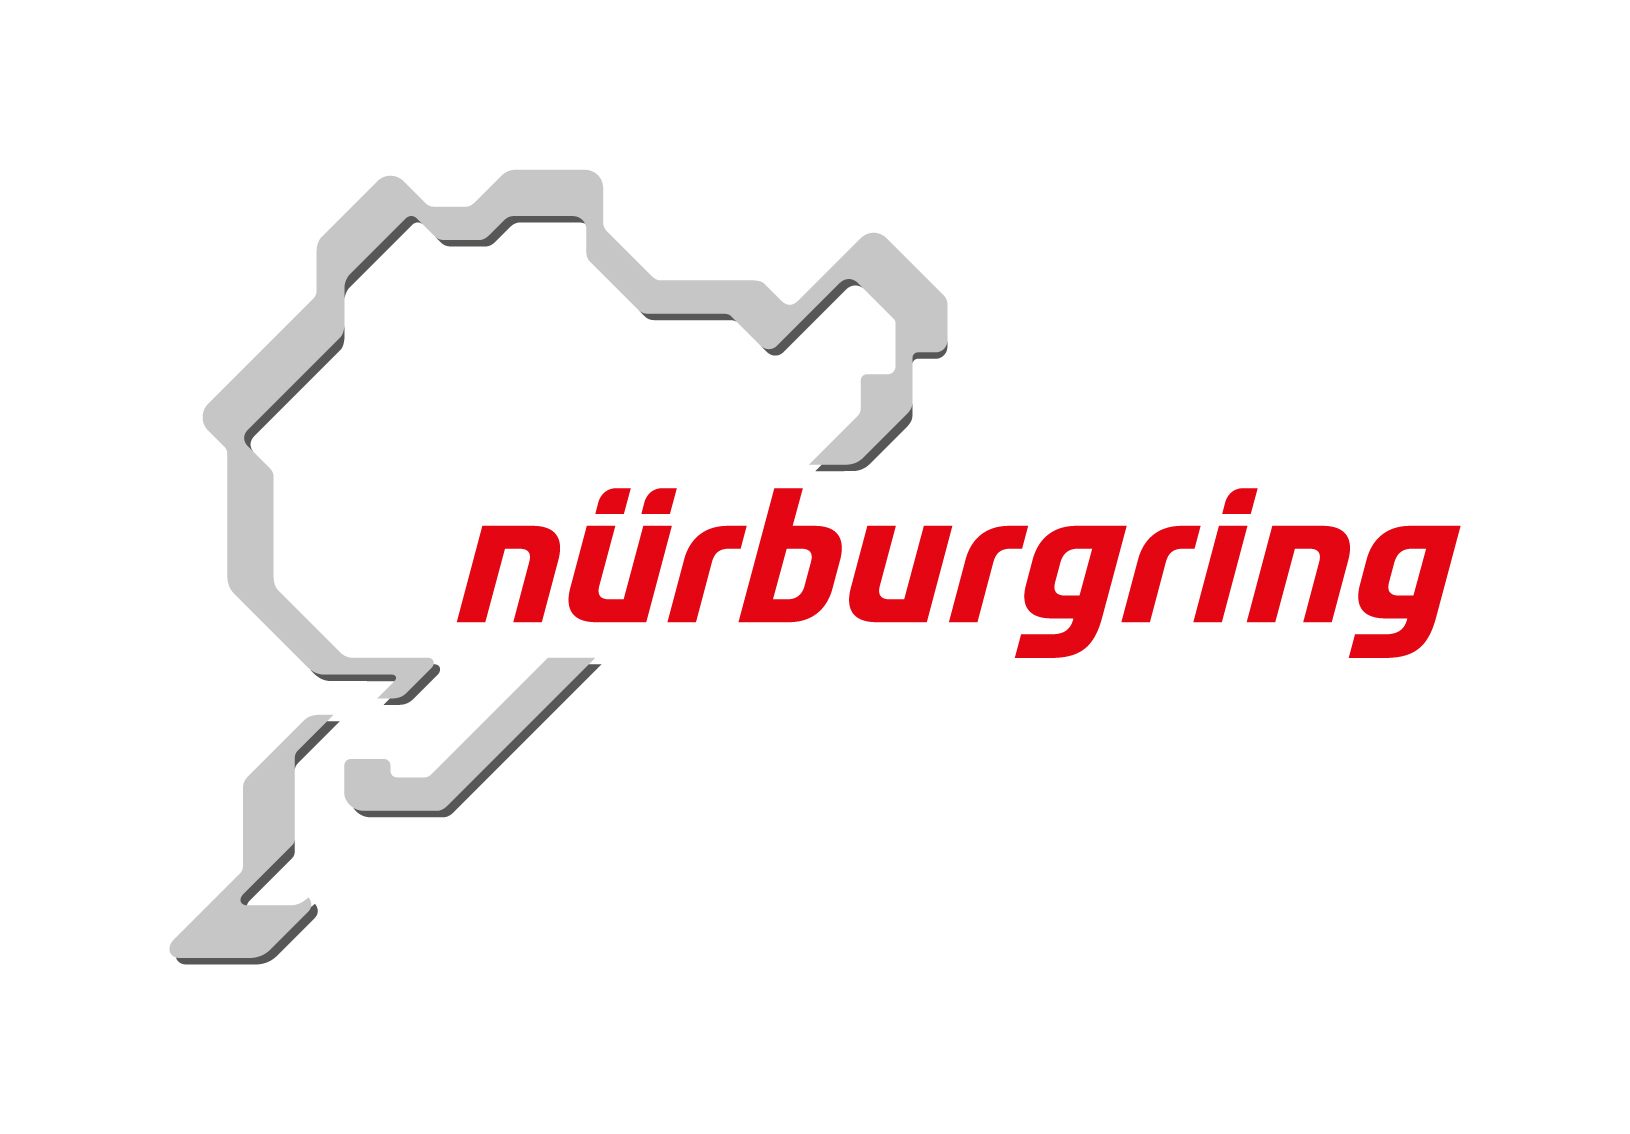 Nürburgring 1927 GmbH & Co. KG